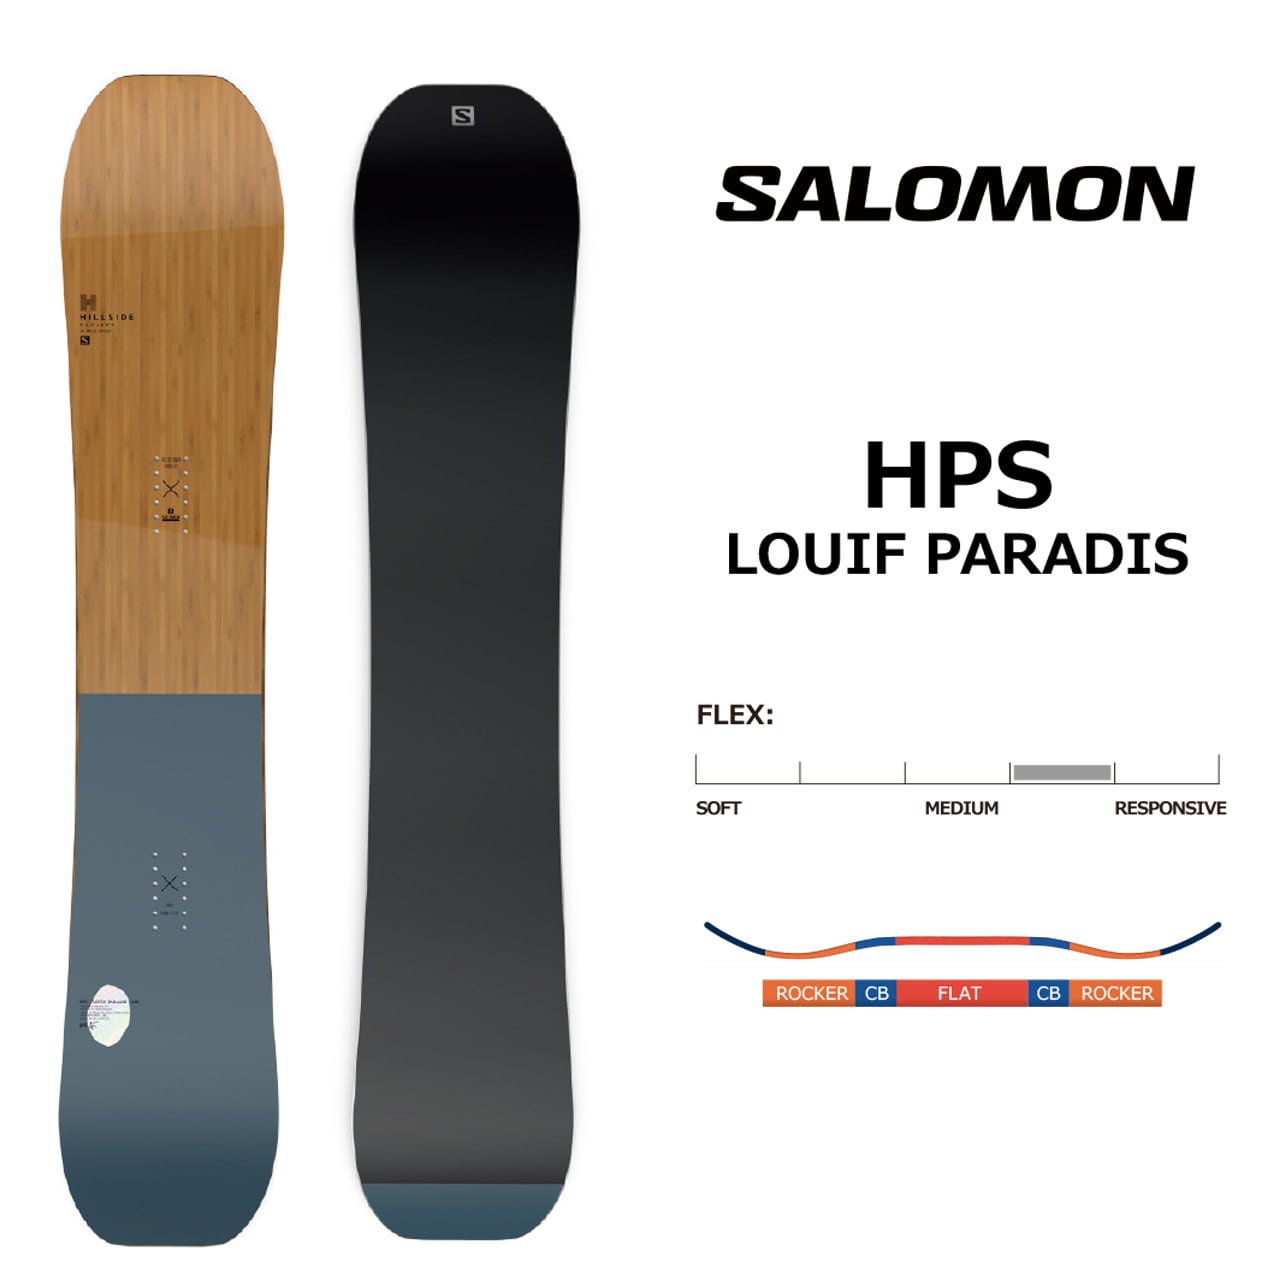 SALOMON サロモン HPS LOUIF PARADIS 155